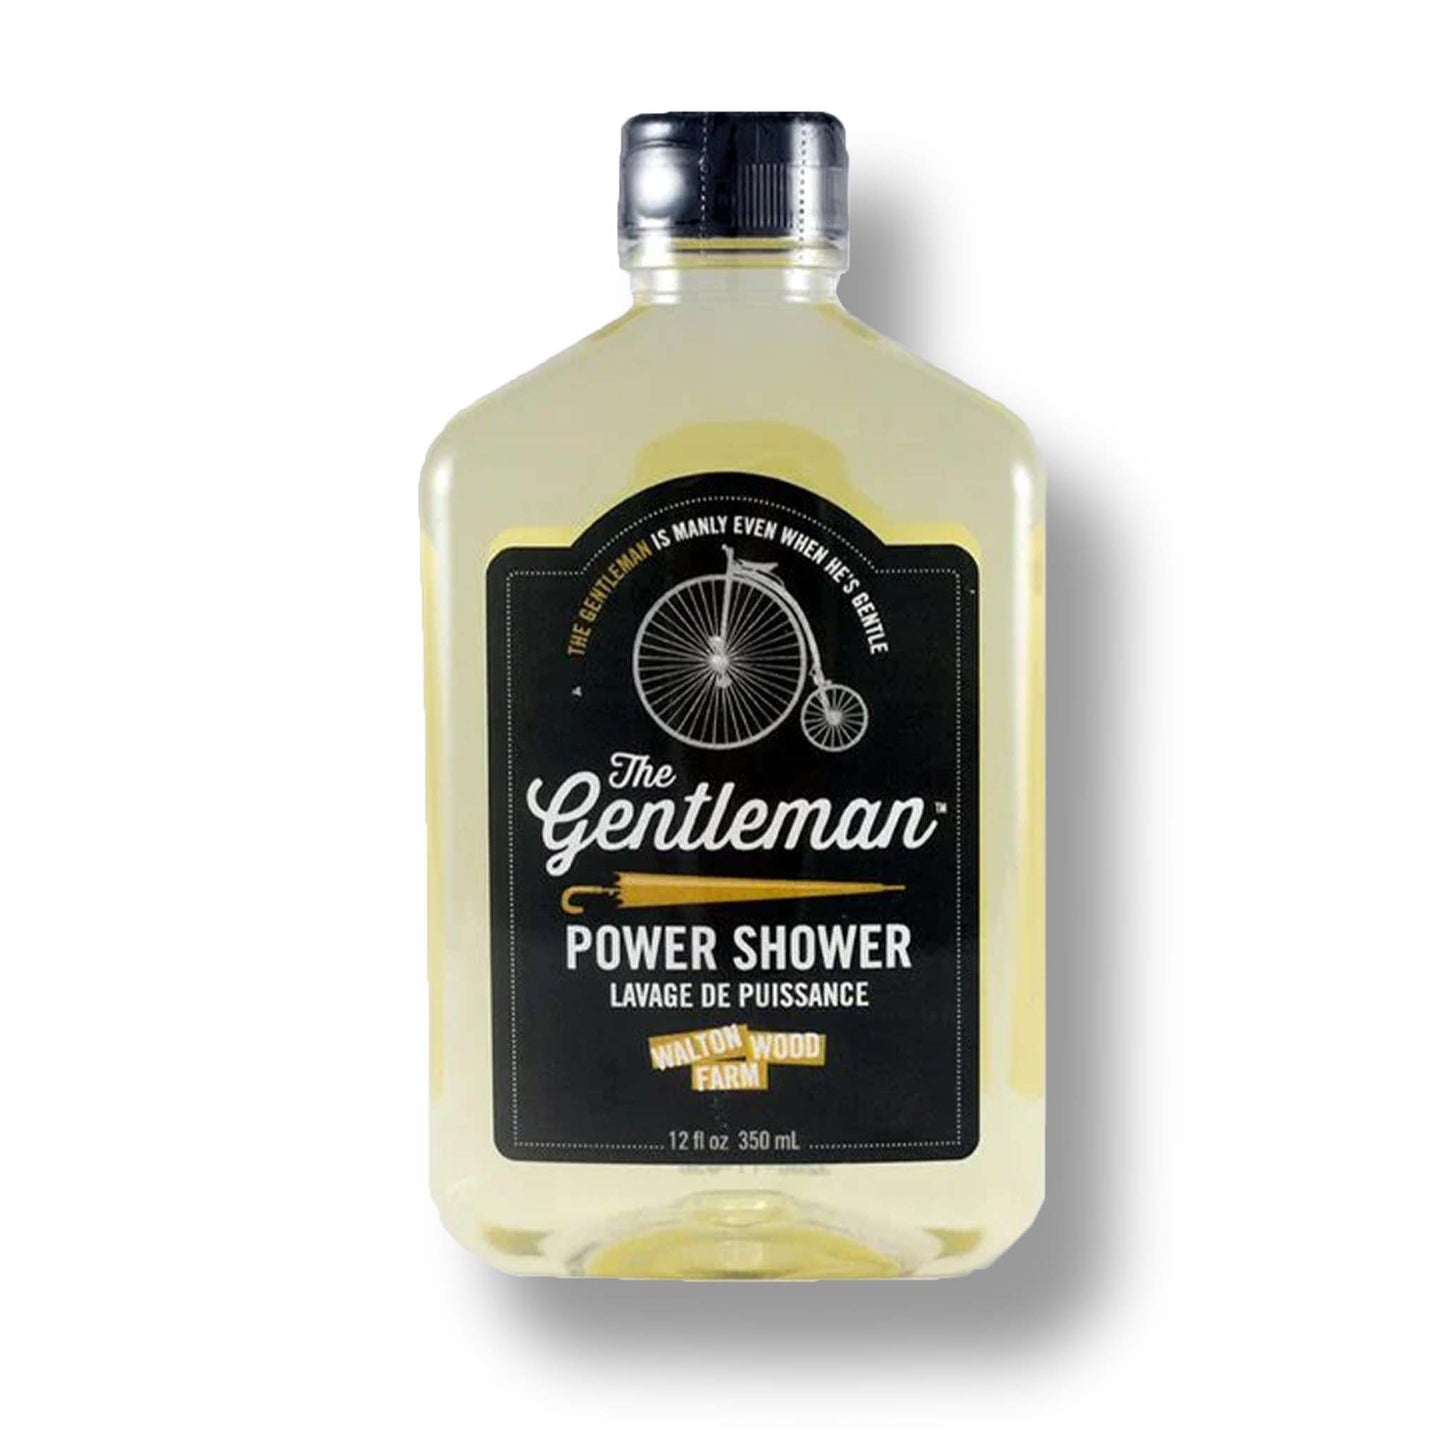 Power Shower - Gentleman 12 oz